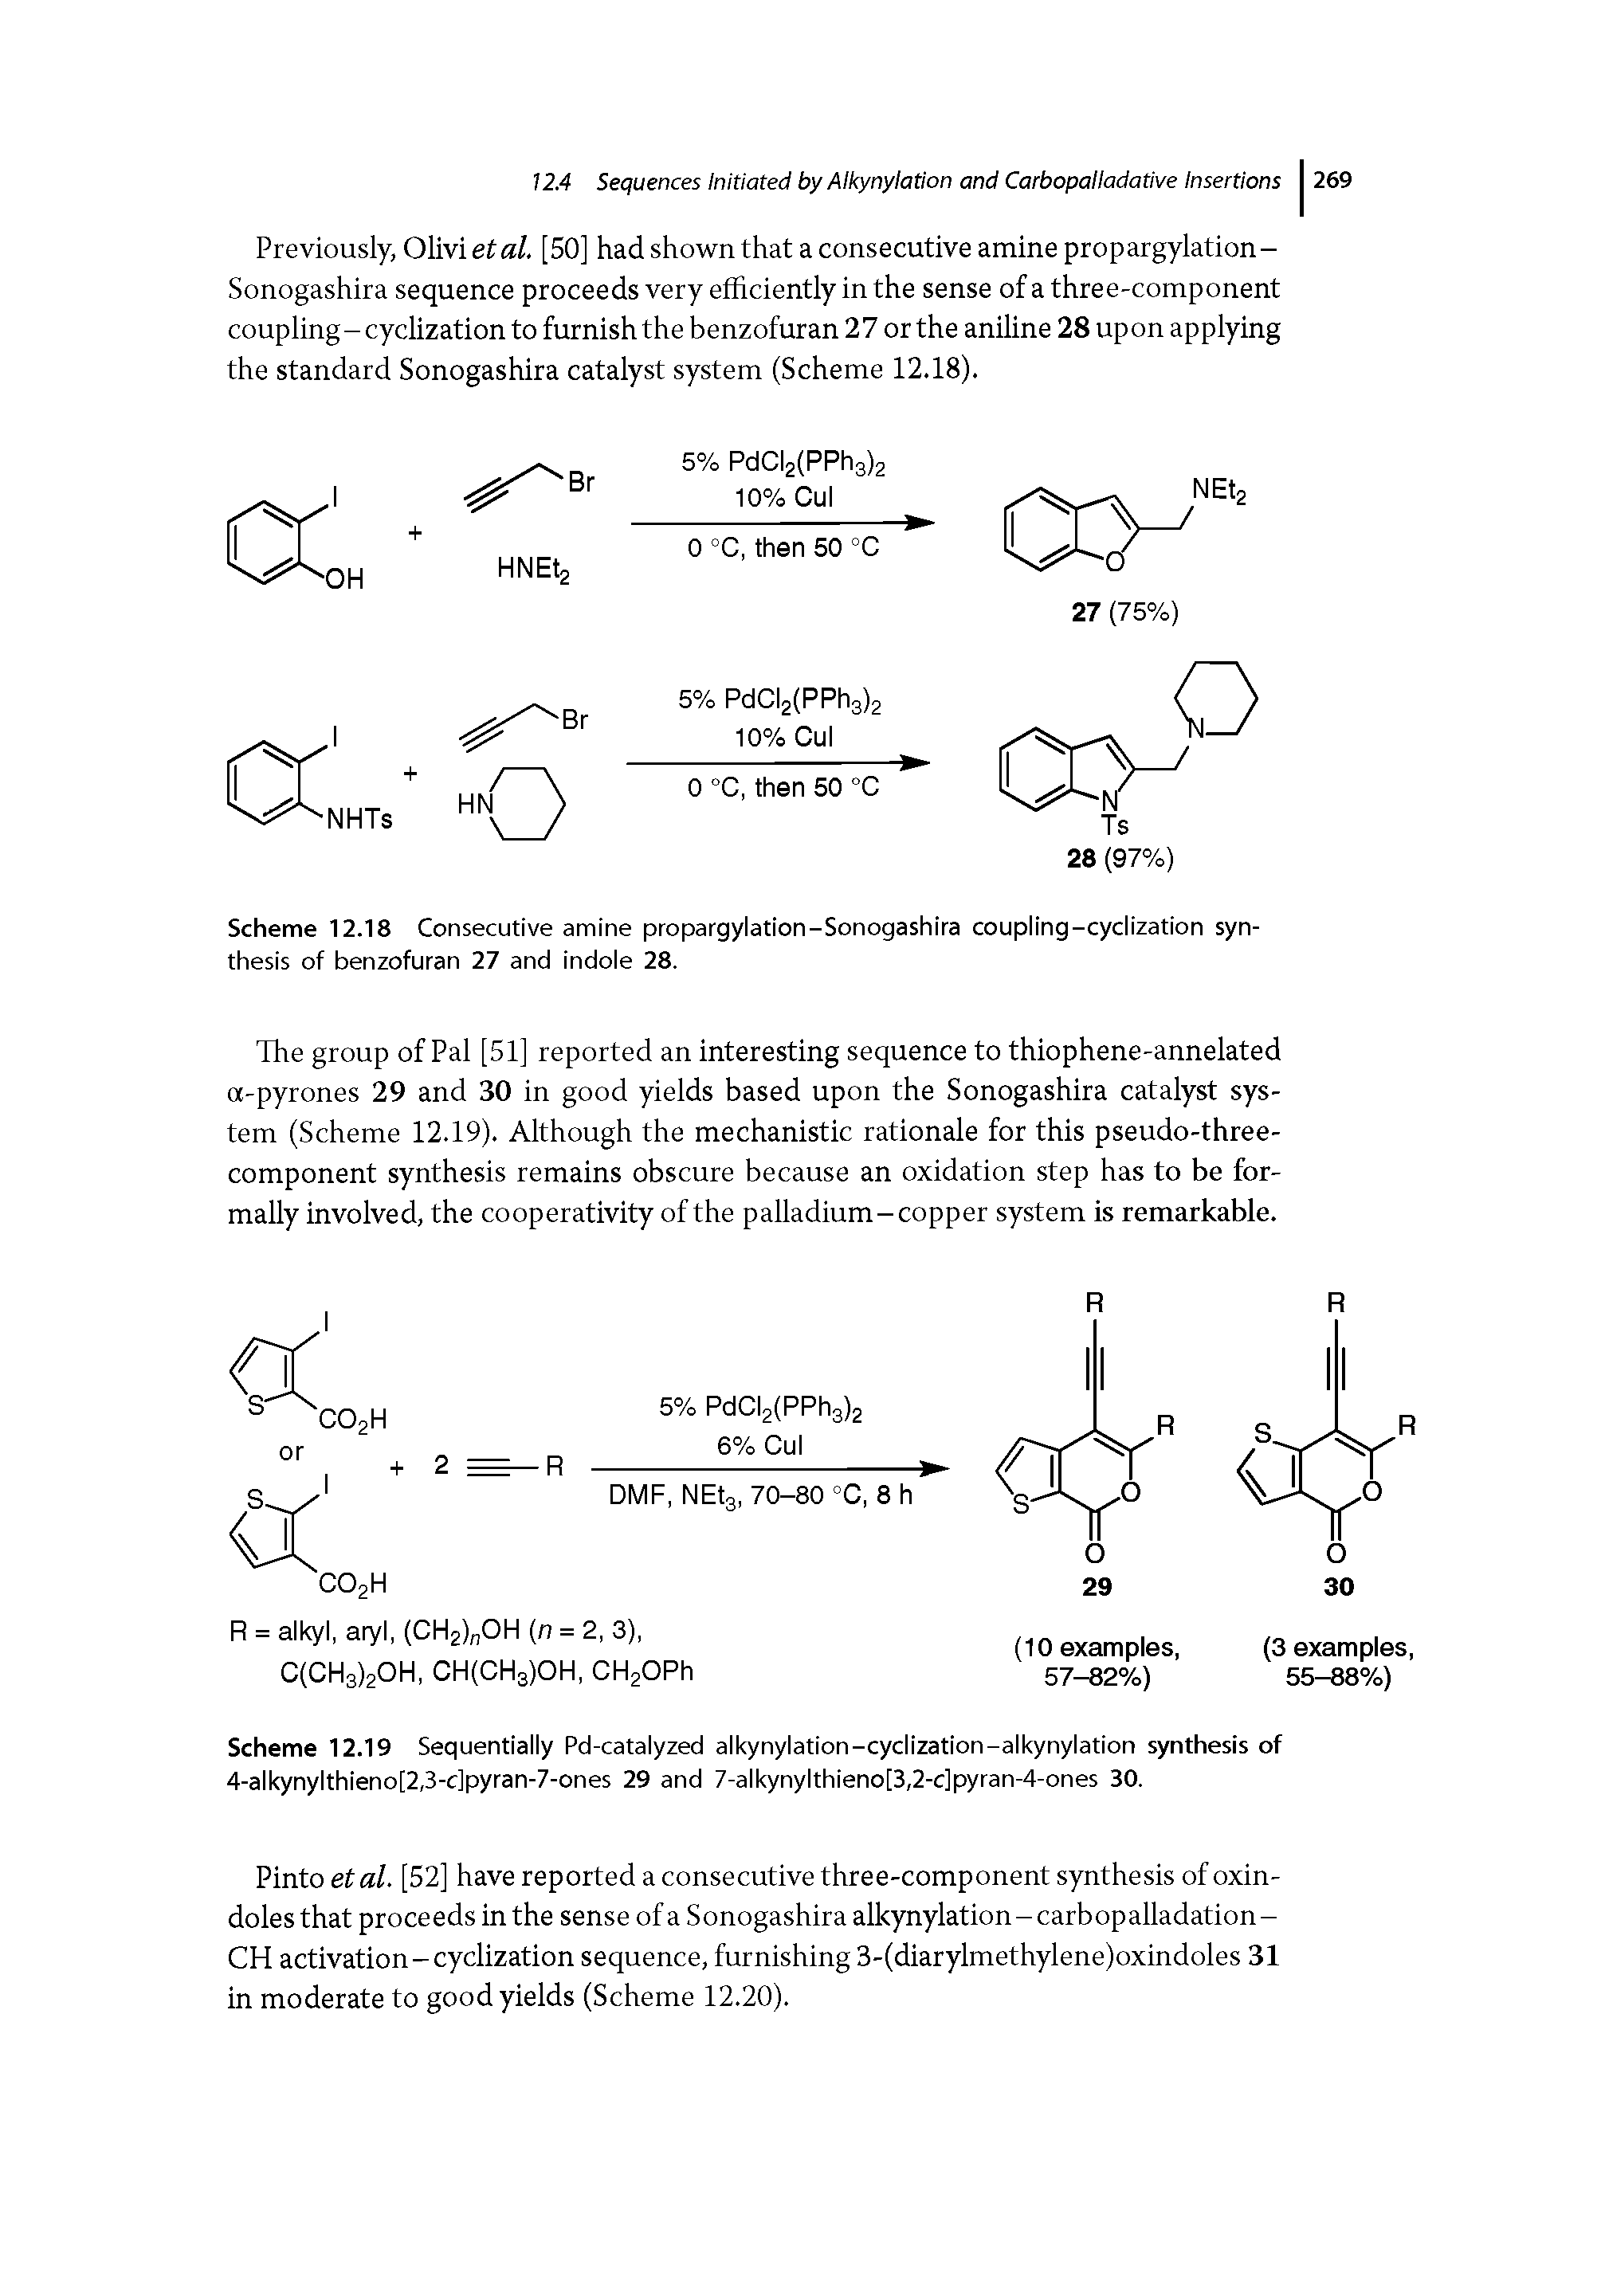 Scheme 12.18 Consecutive amine propargylation-Sonogashira coupling-cyclization synthesis of benzofuran 27 and indole 28.